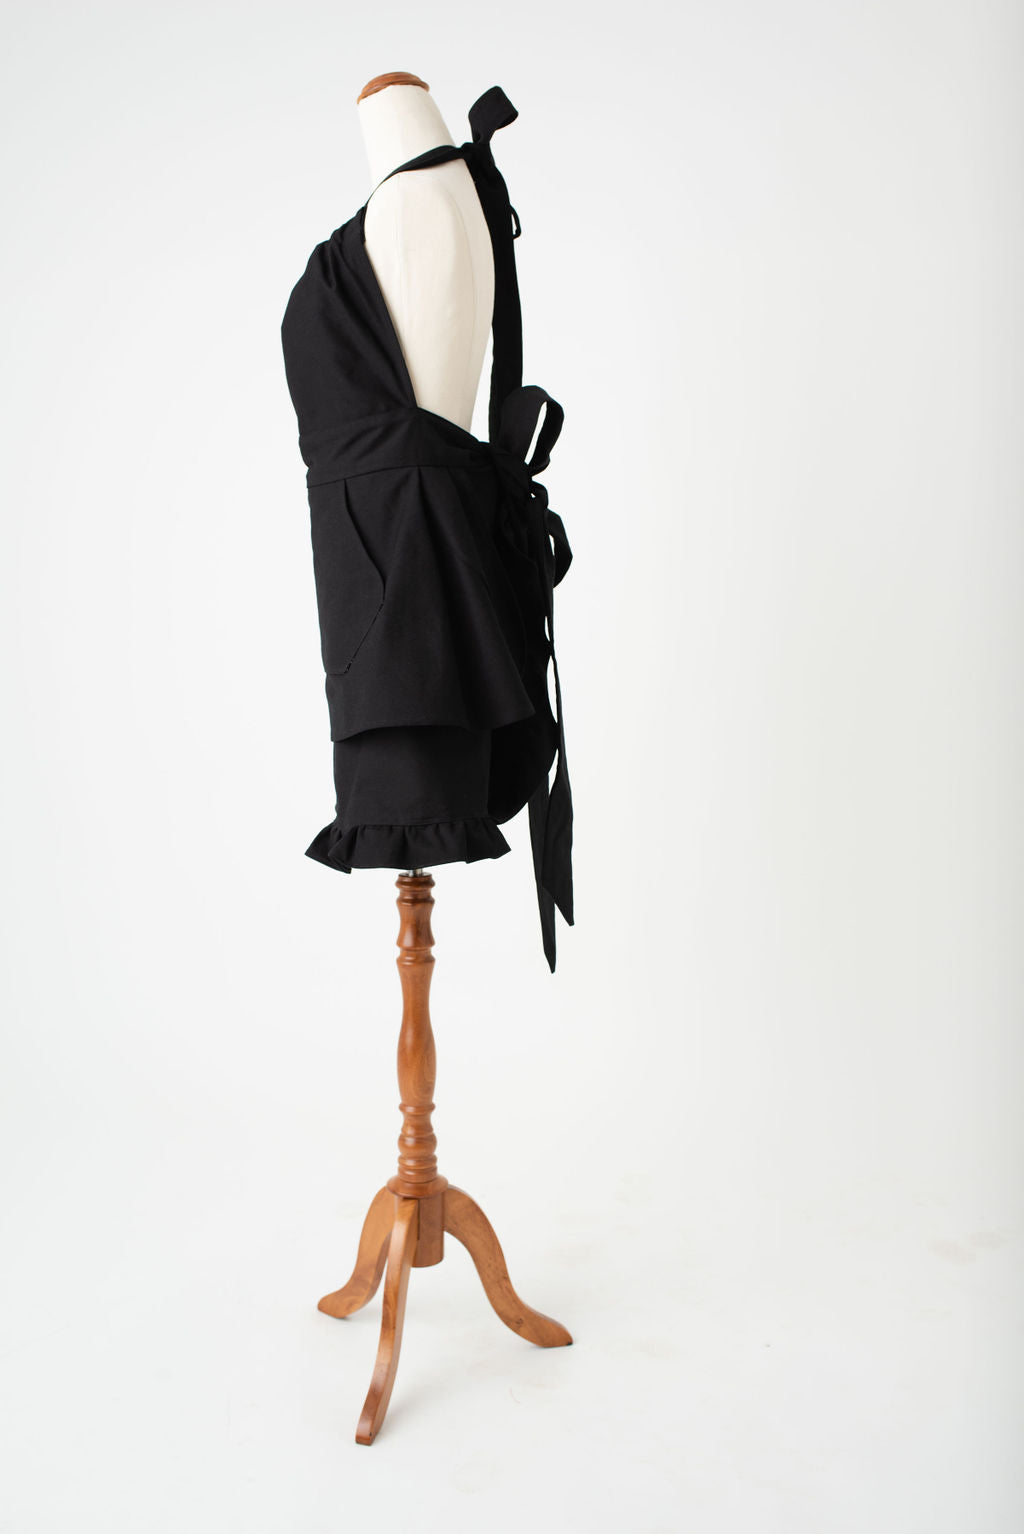 High waist feminine hostess apron in black by Pretty Made - Left side